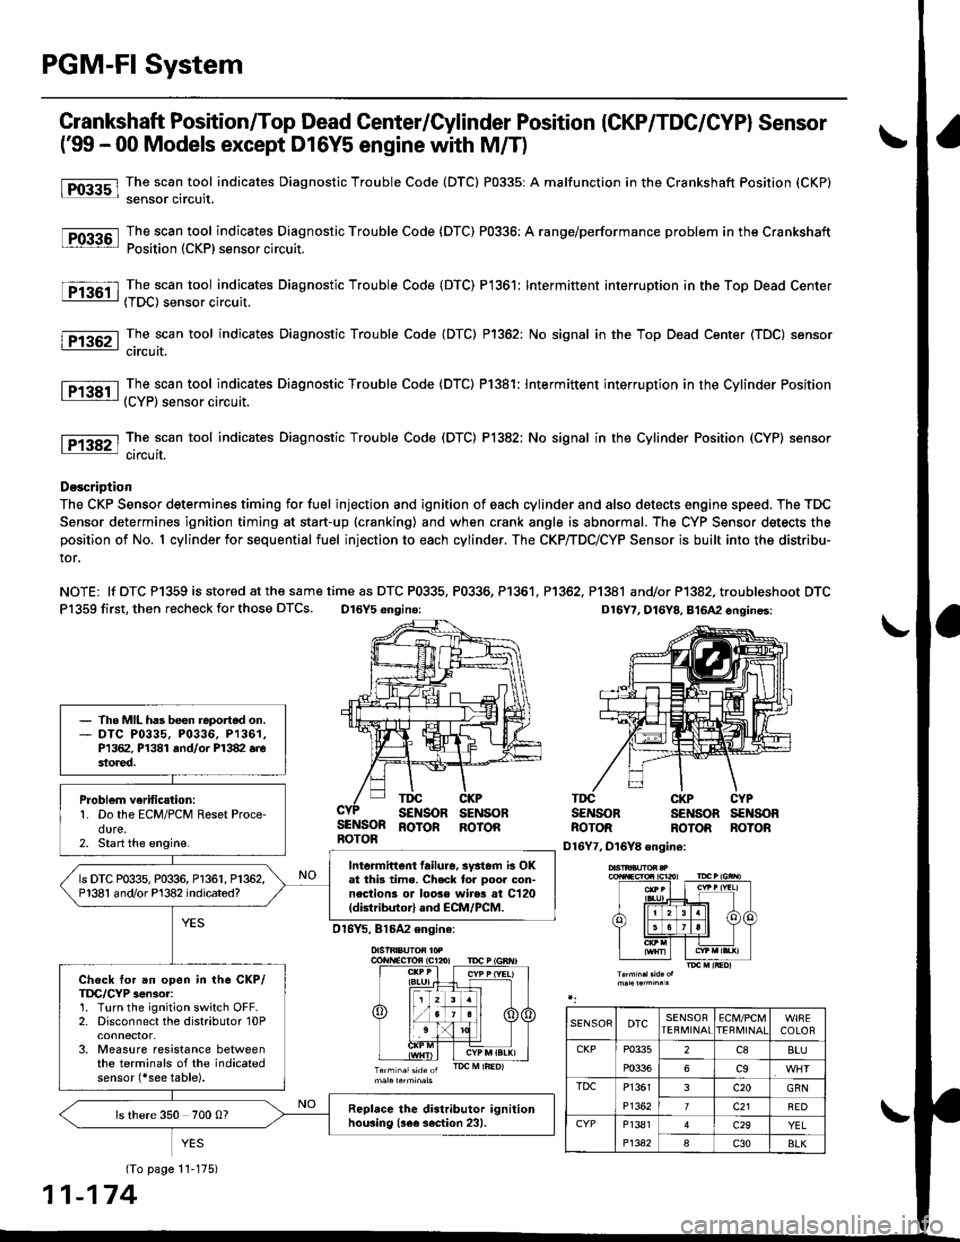 HONDA CIVIC 1996 6.G Workshop Manual PGM-FI System
l-Fos3sl
tFos36l
tF1361 l
Fr362-1
tF13sil
Crankshaft Position/Top Dead Center/Cylinder Position (CKP/TDC/CYPI Sensor
f99 - 00 Models except D16Y5 engine with M/T)
The scan tool indicates